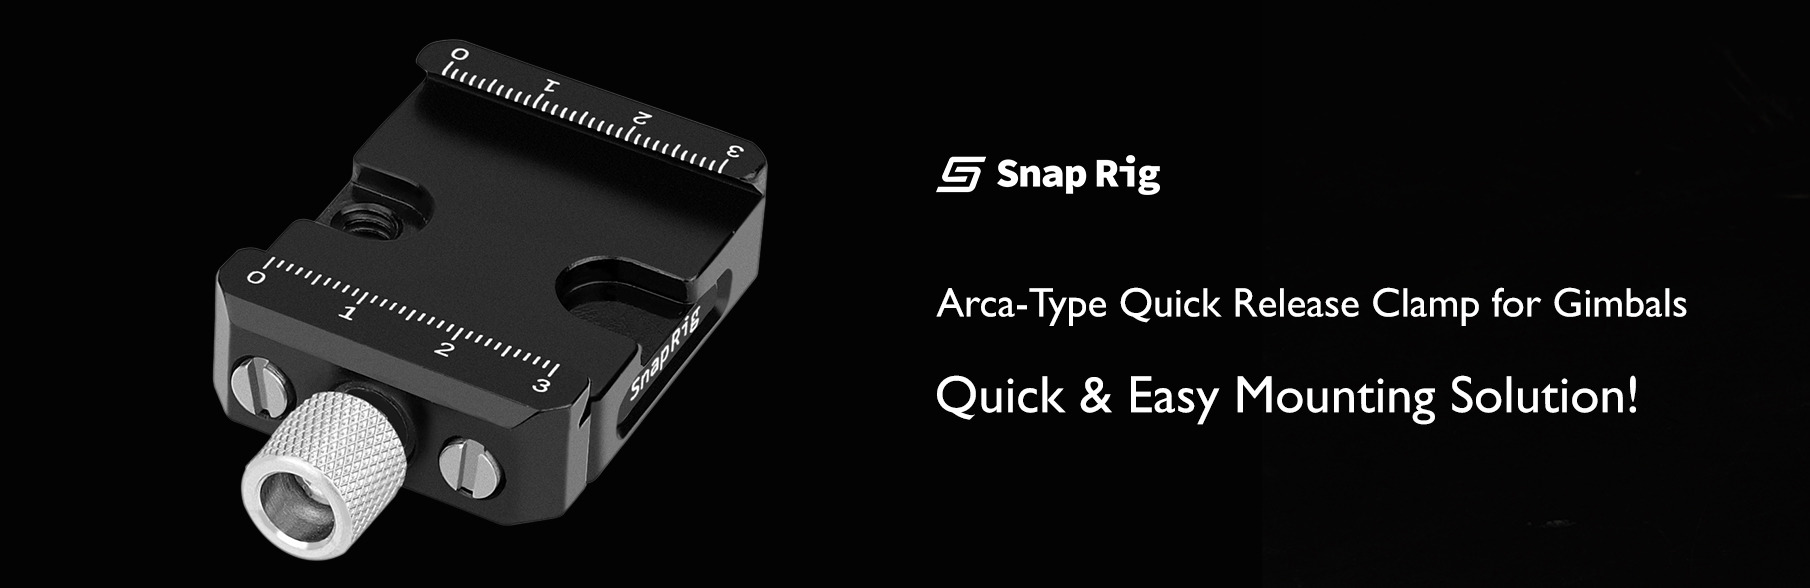 Proaim-SnapRig-Arca-Type-Quick-Release-Clamp